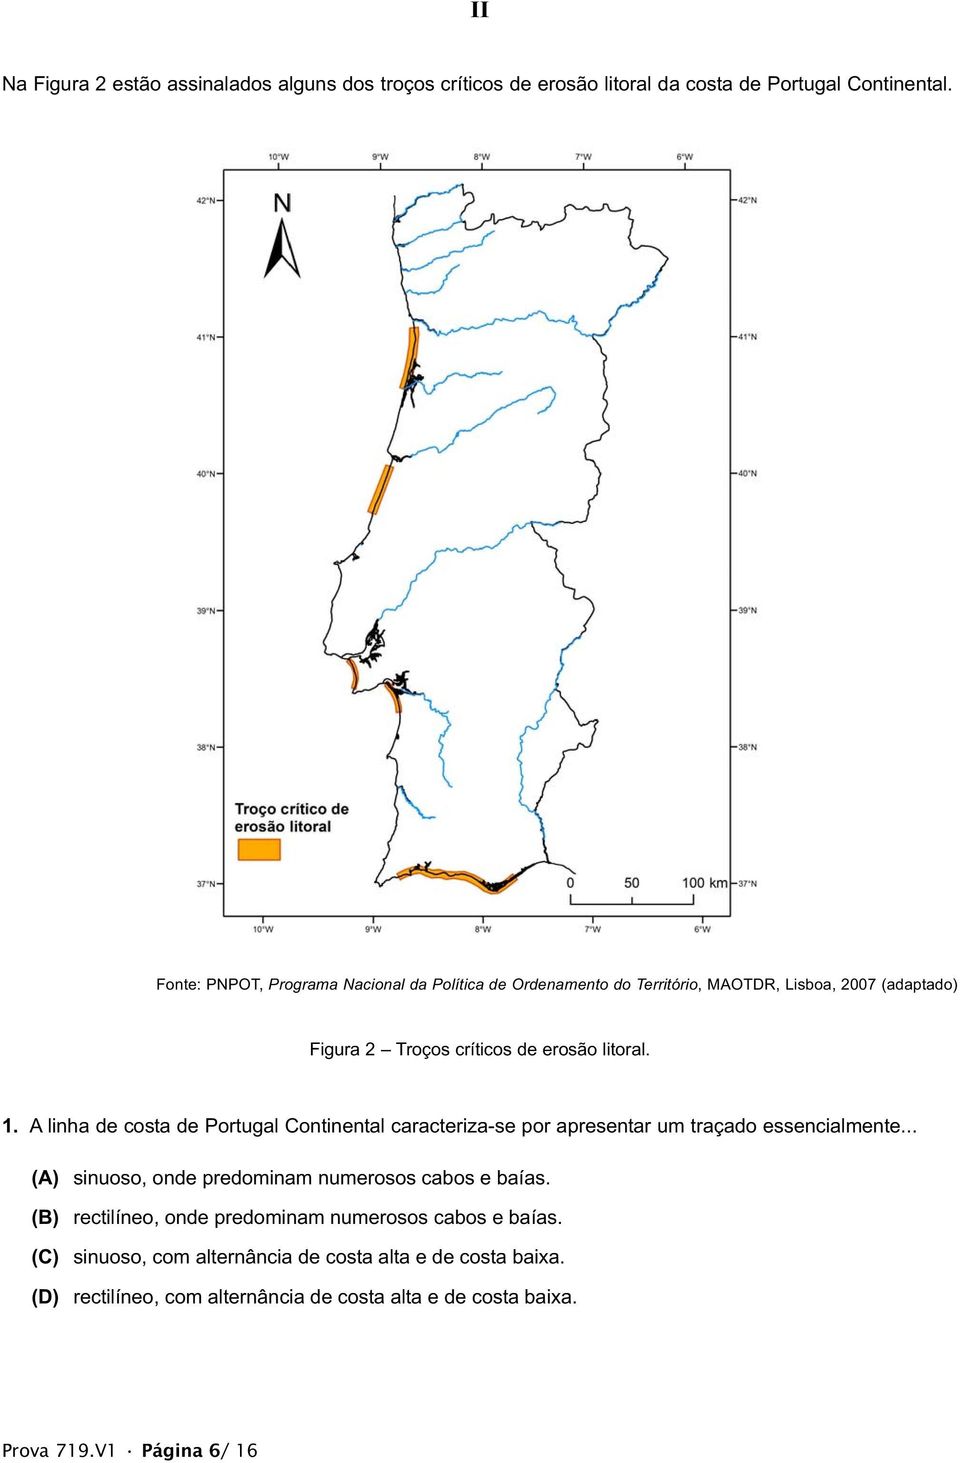 A linha de costa de Portugal Continental caracteriza-se por apresentar um traçado essencialmente... (A) sinuoso, onde predominam numerosos cabos e baías.